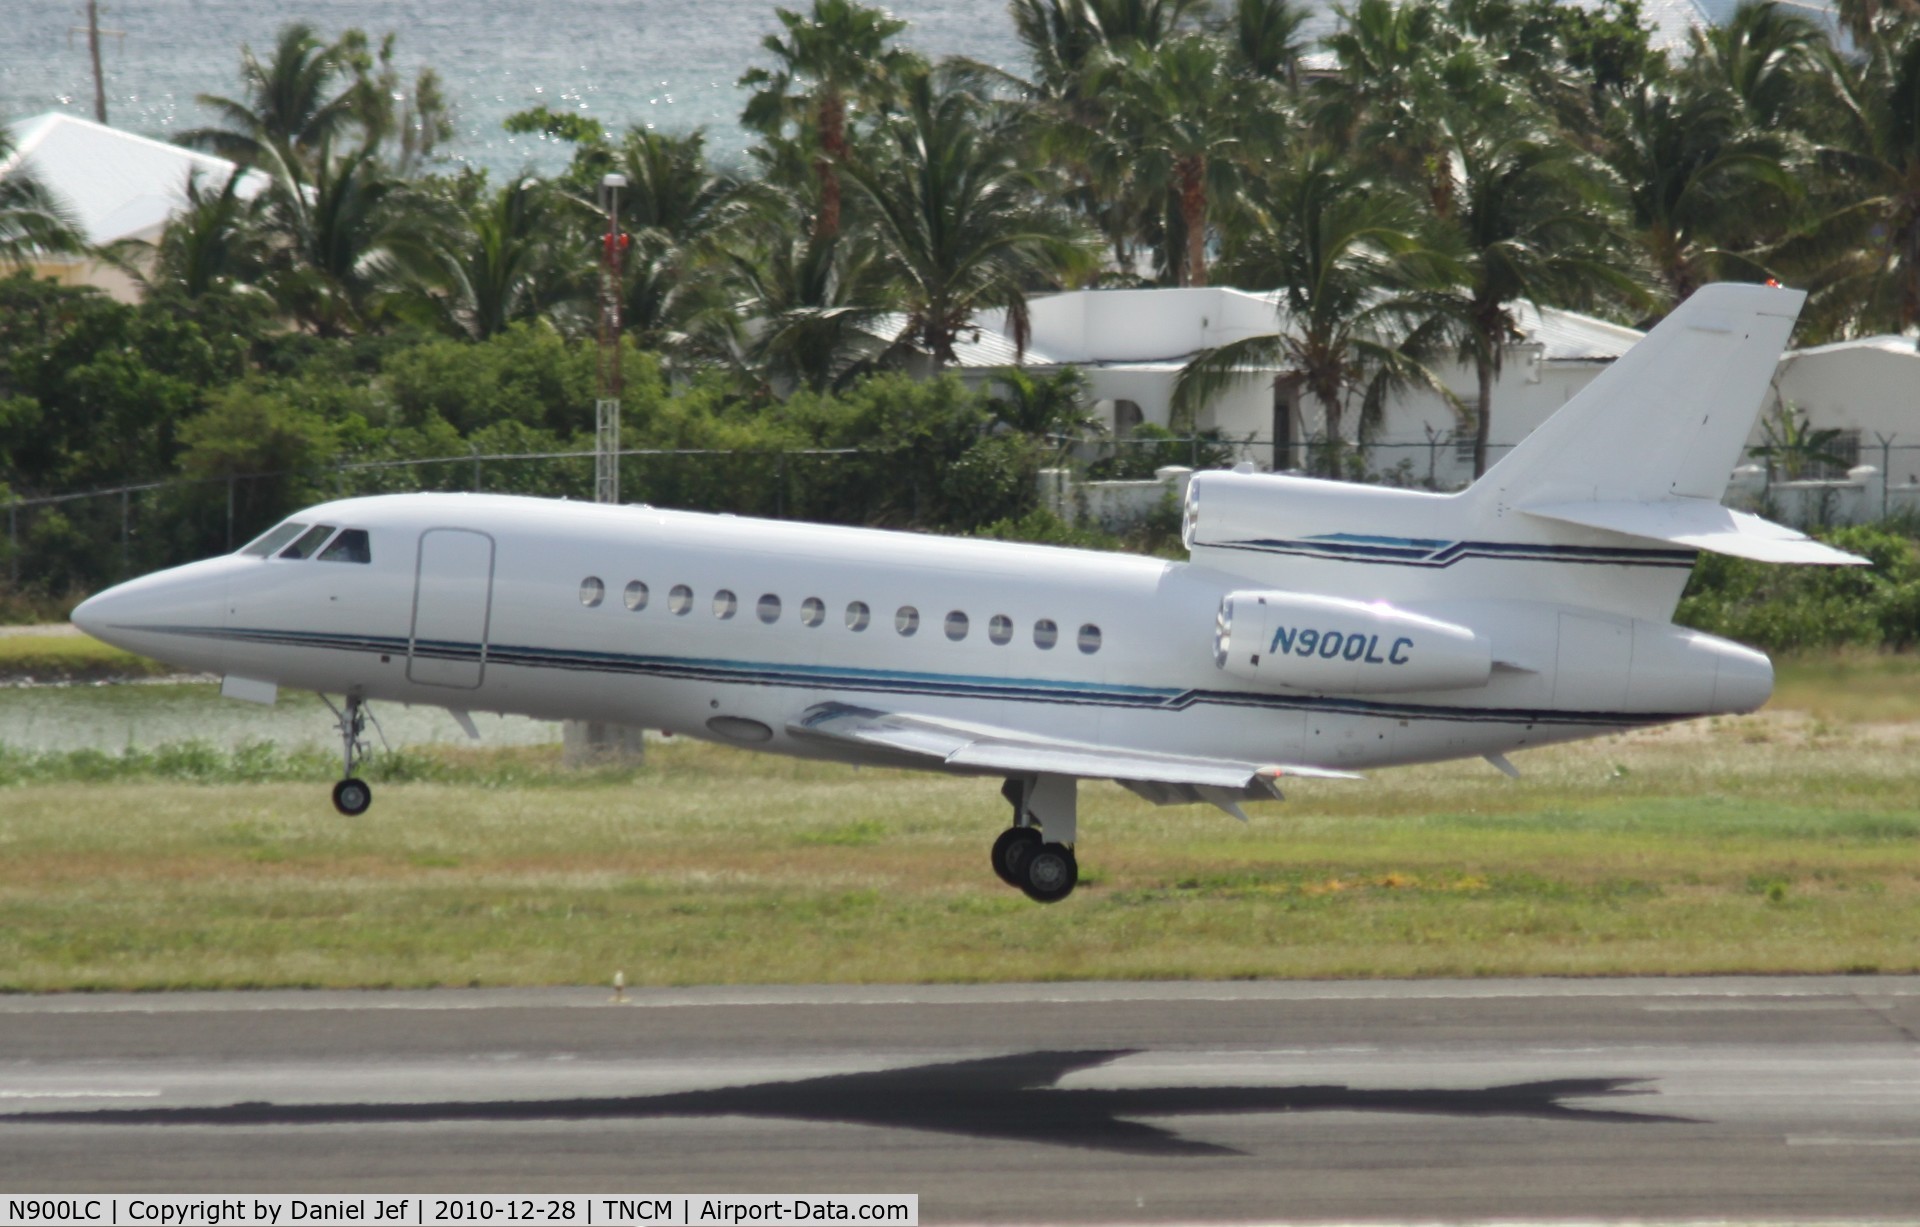 N900LC, 2000 Dassault Falcon 900 C/N 186, N900LC landing at TNCM